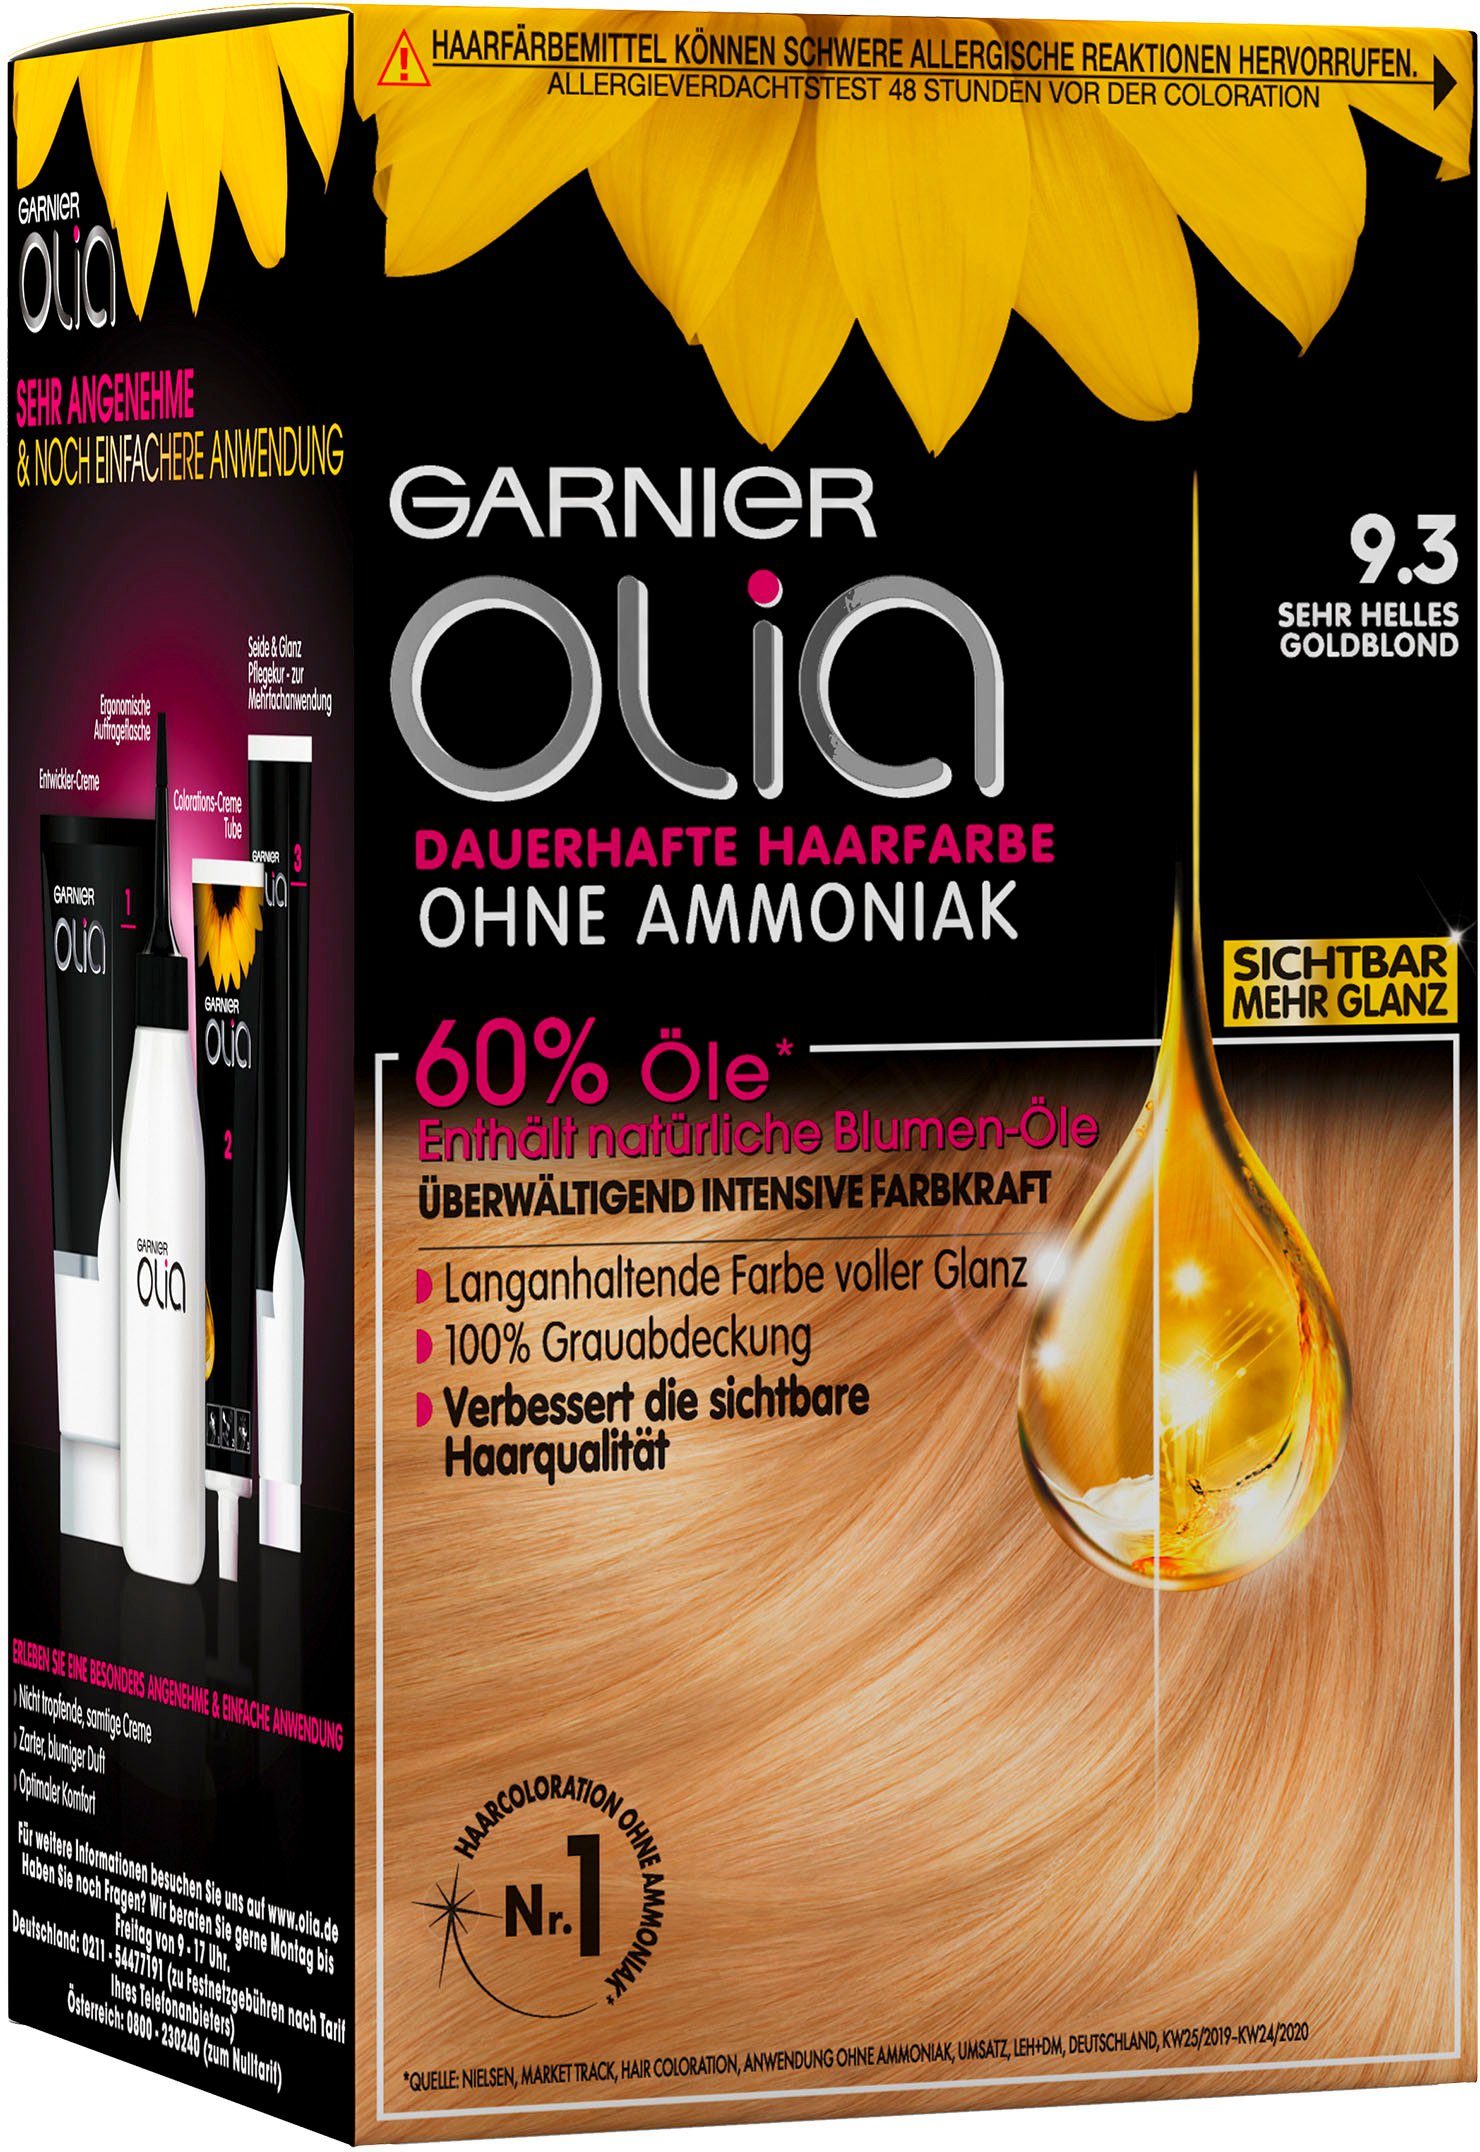 helles Haarfarbe dauerhafte Olia 9.3 Sehr goldblond GARNIER Coloration